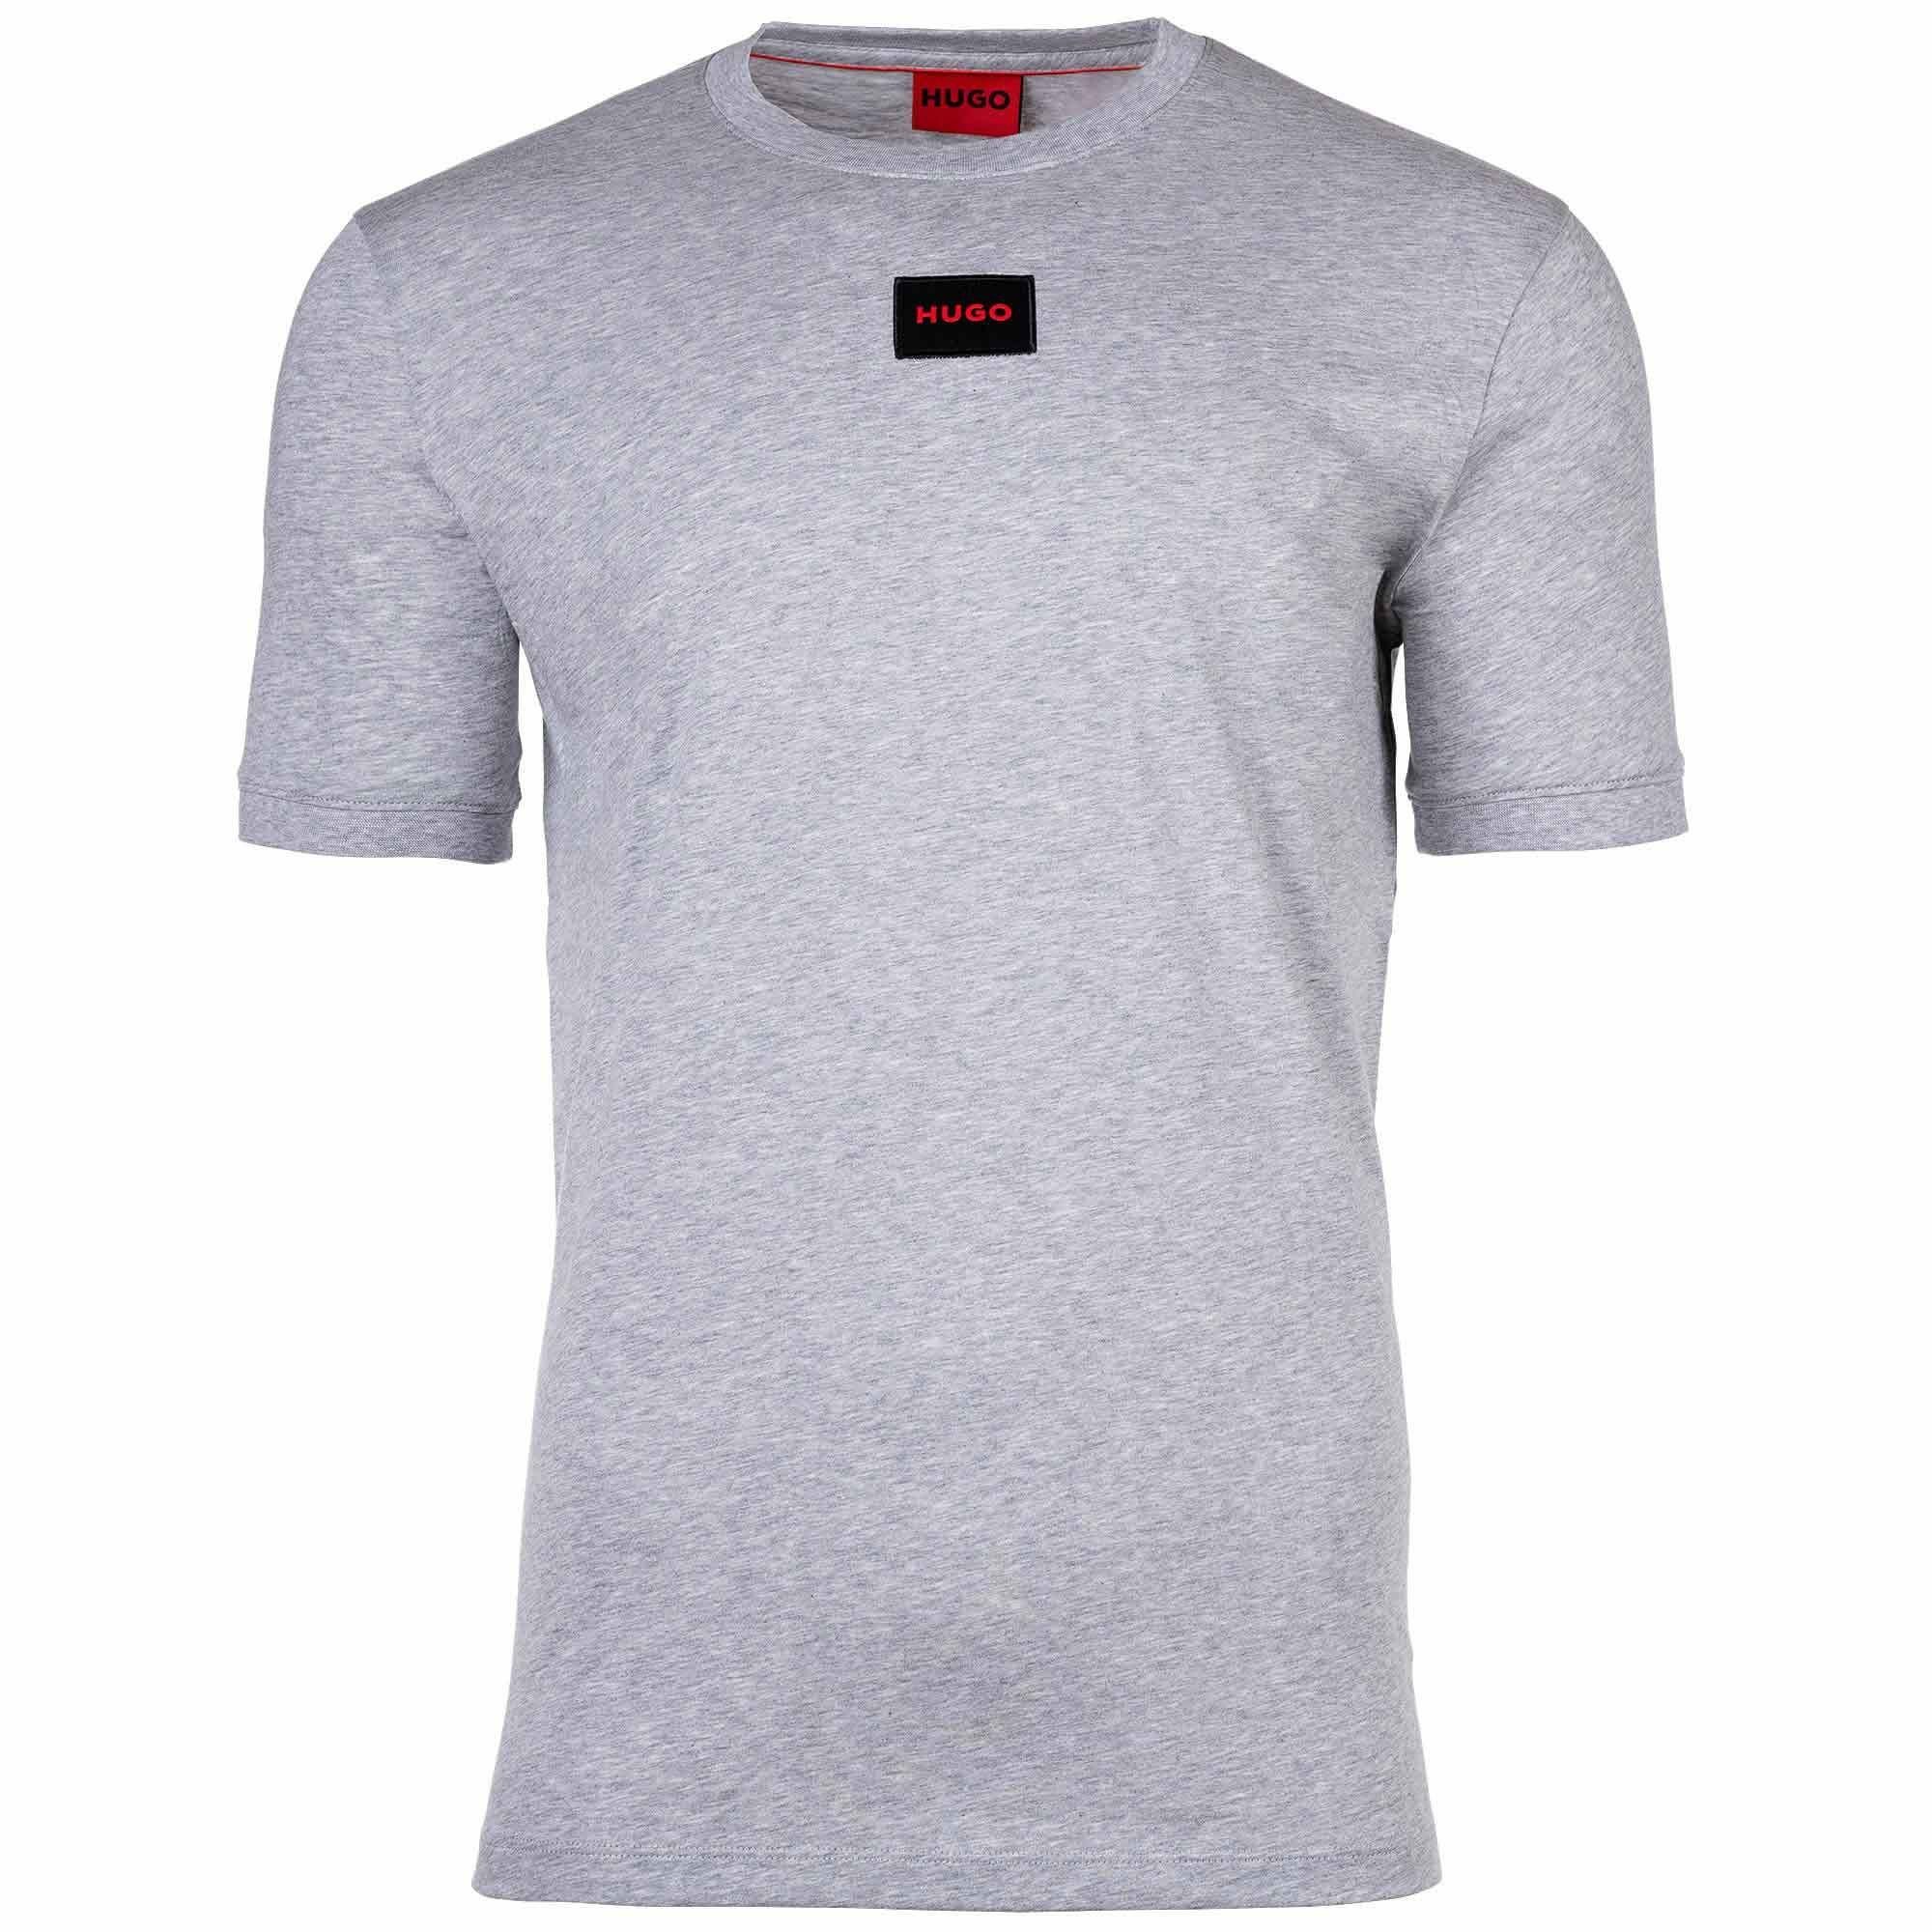 - Grey) Grau Rundhals HUGO T-Shirt T-Shirt Herren (Open Diragolino212